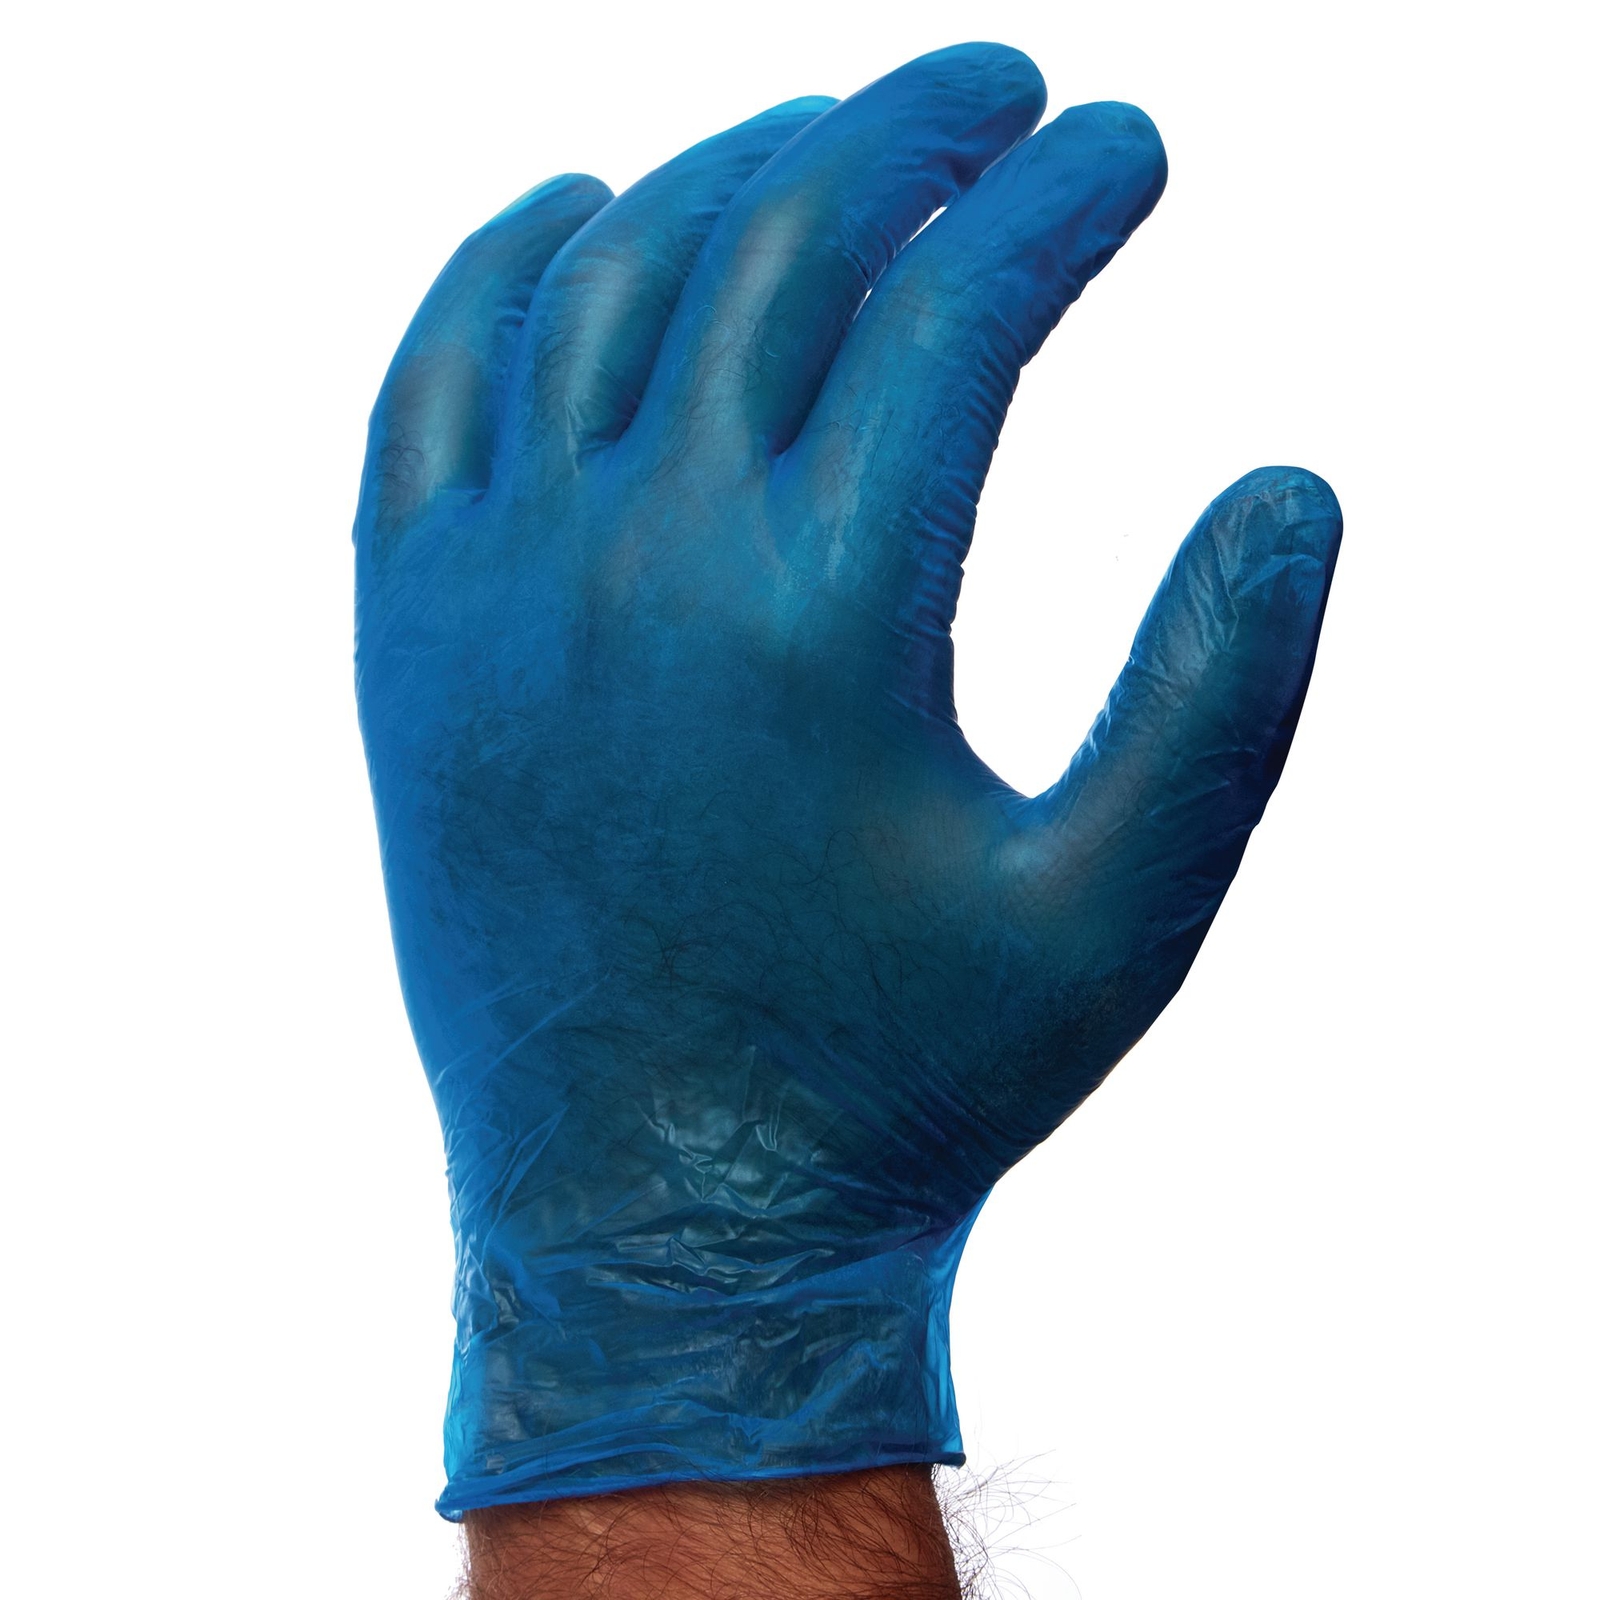 Blue Powdered Vinyl Disposable Glove - Medium